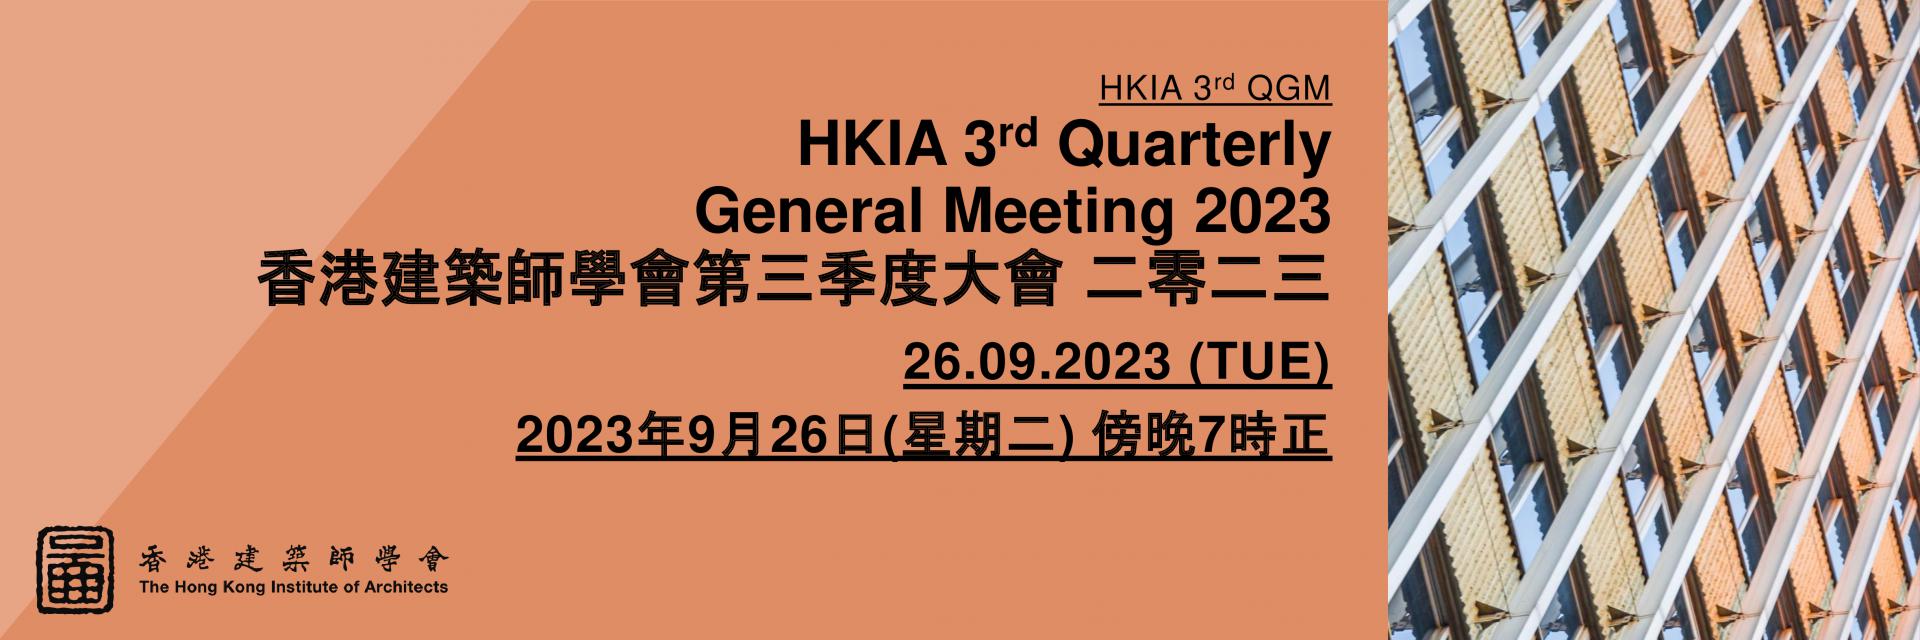 Meeting for HKIA Third Quarterly General Meeting (3rd QGM) 2023